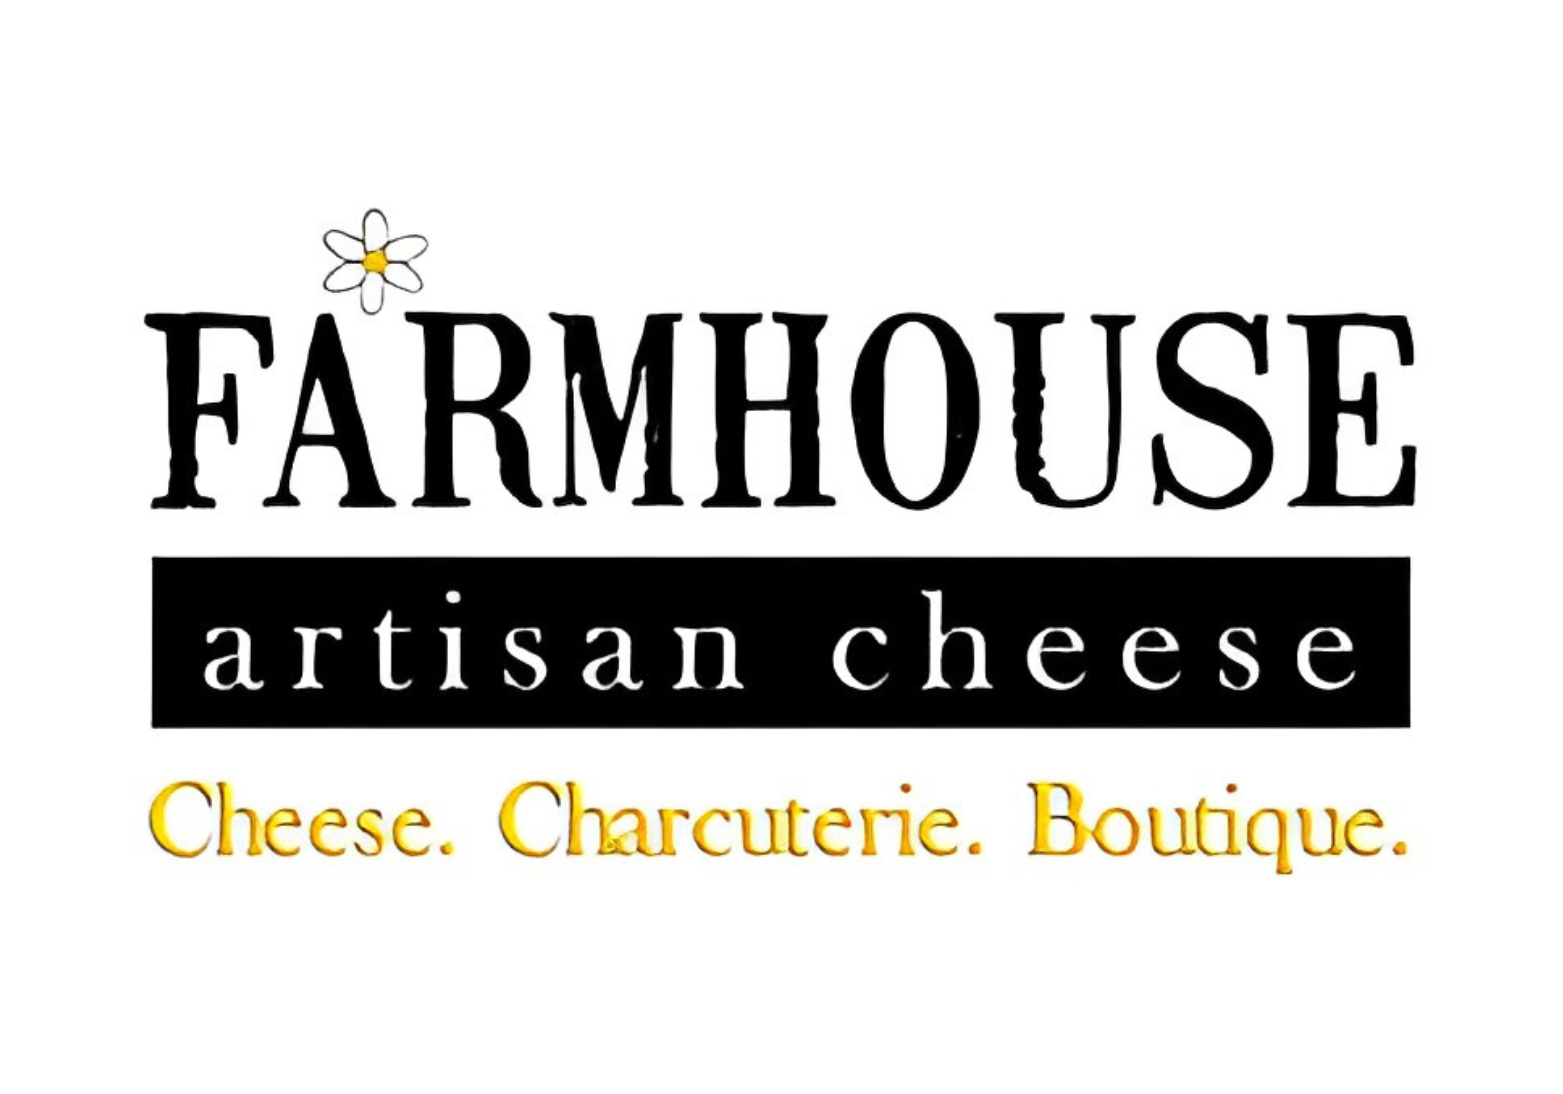 Alumni Marketplace: Farmhouse Artisan Cheese